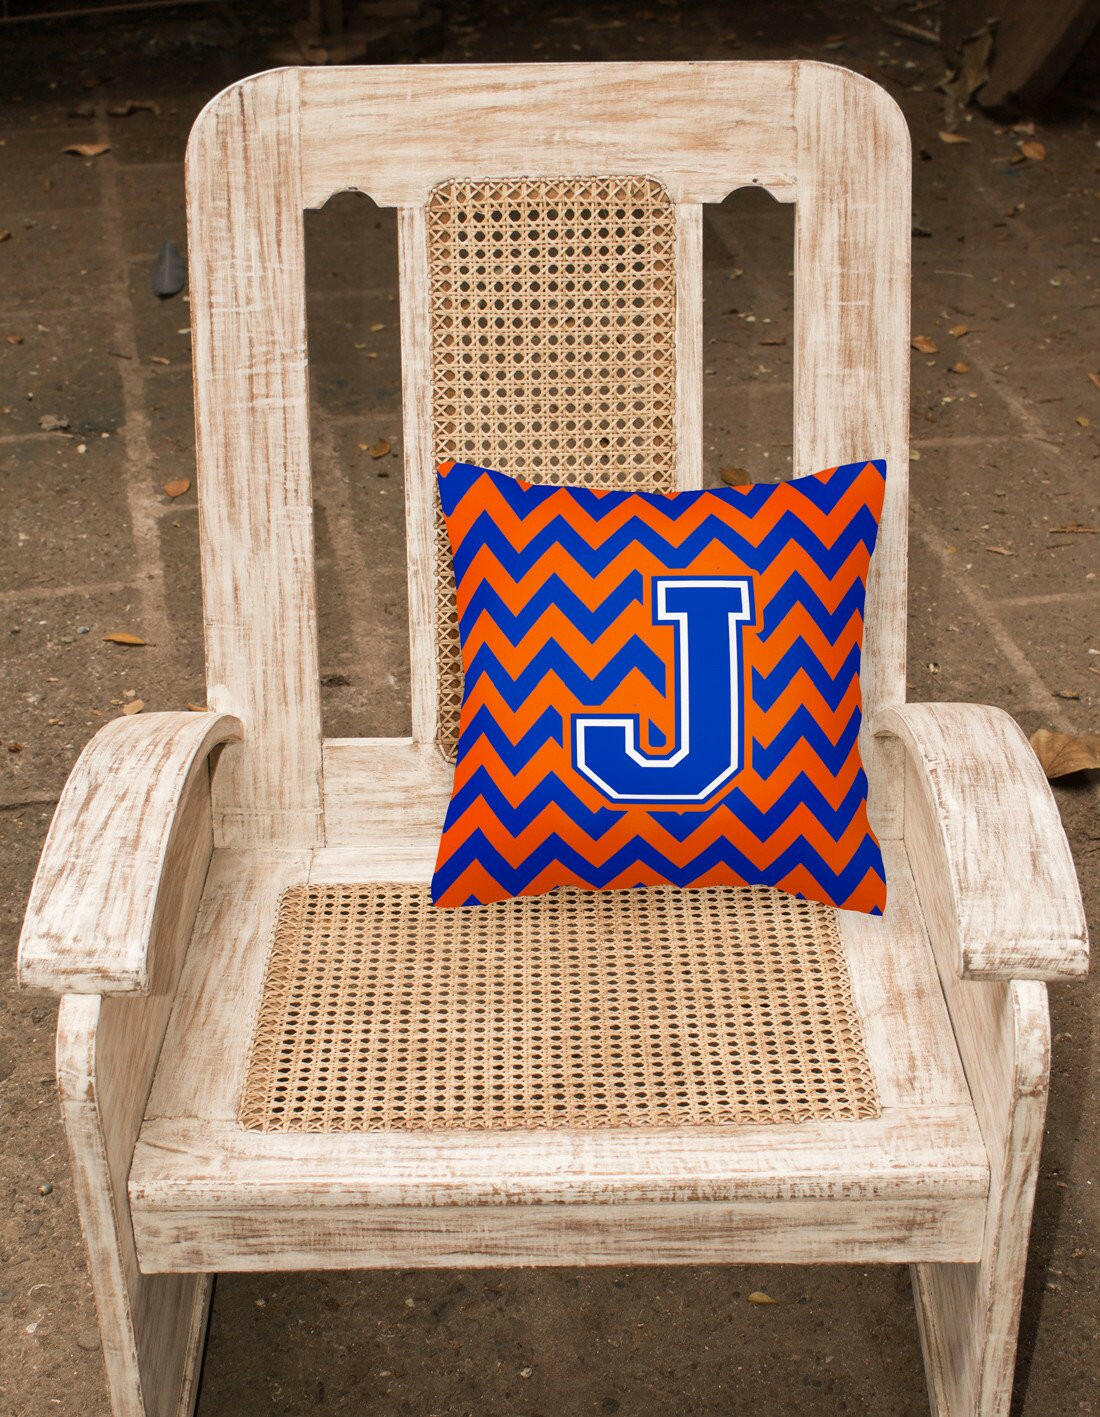 Letter J Chevron Orange and Blue Fabric Decorative Pillow CJ1044-JPW1414 - the-store.com